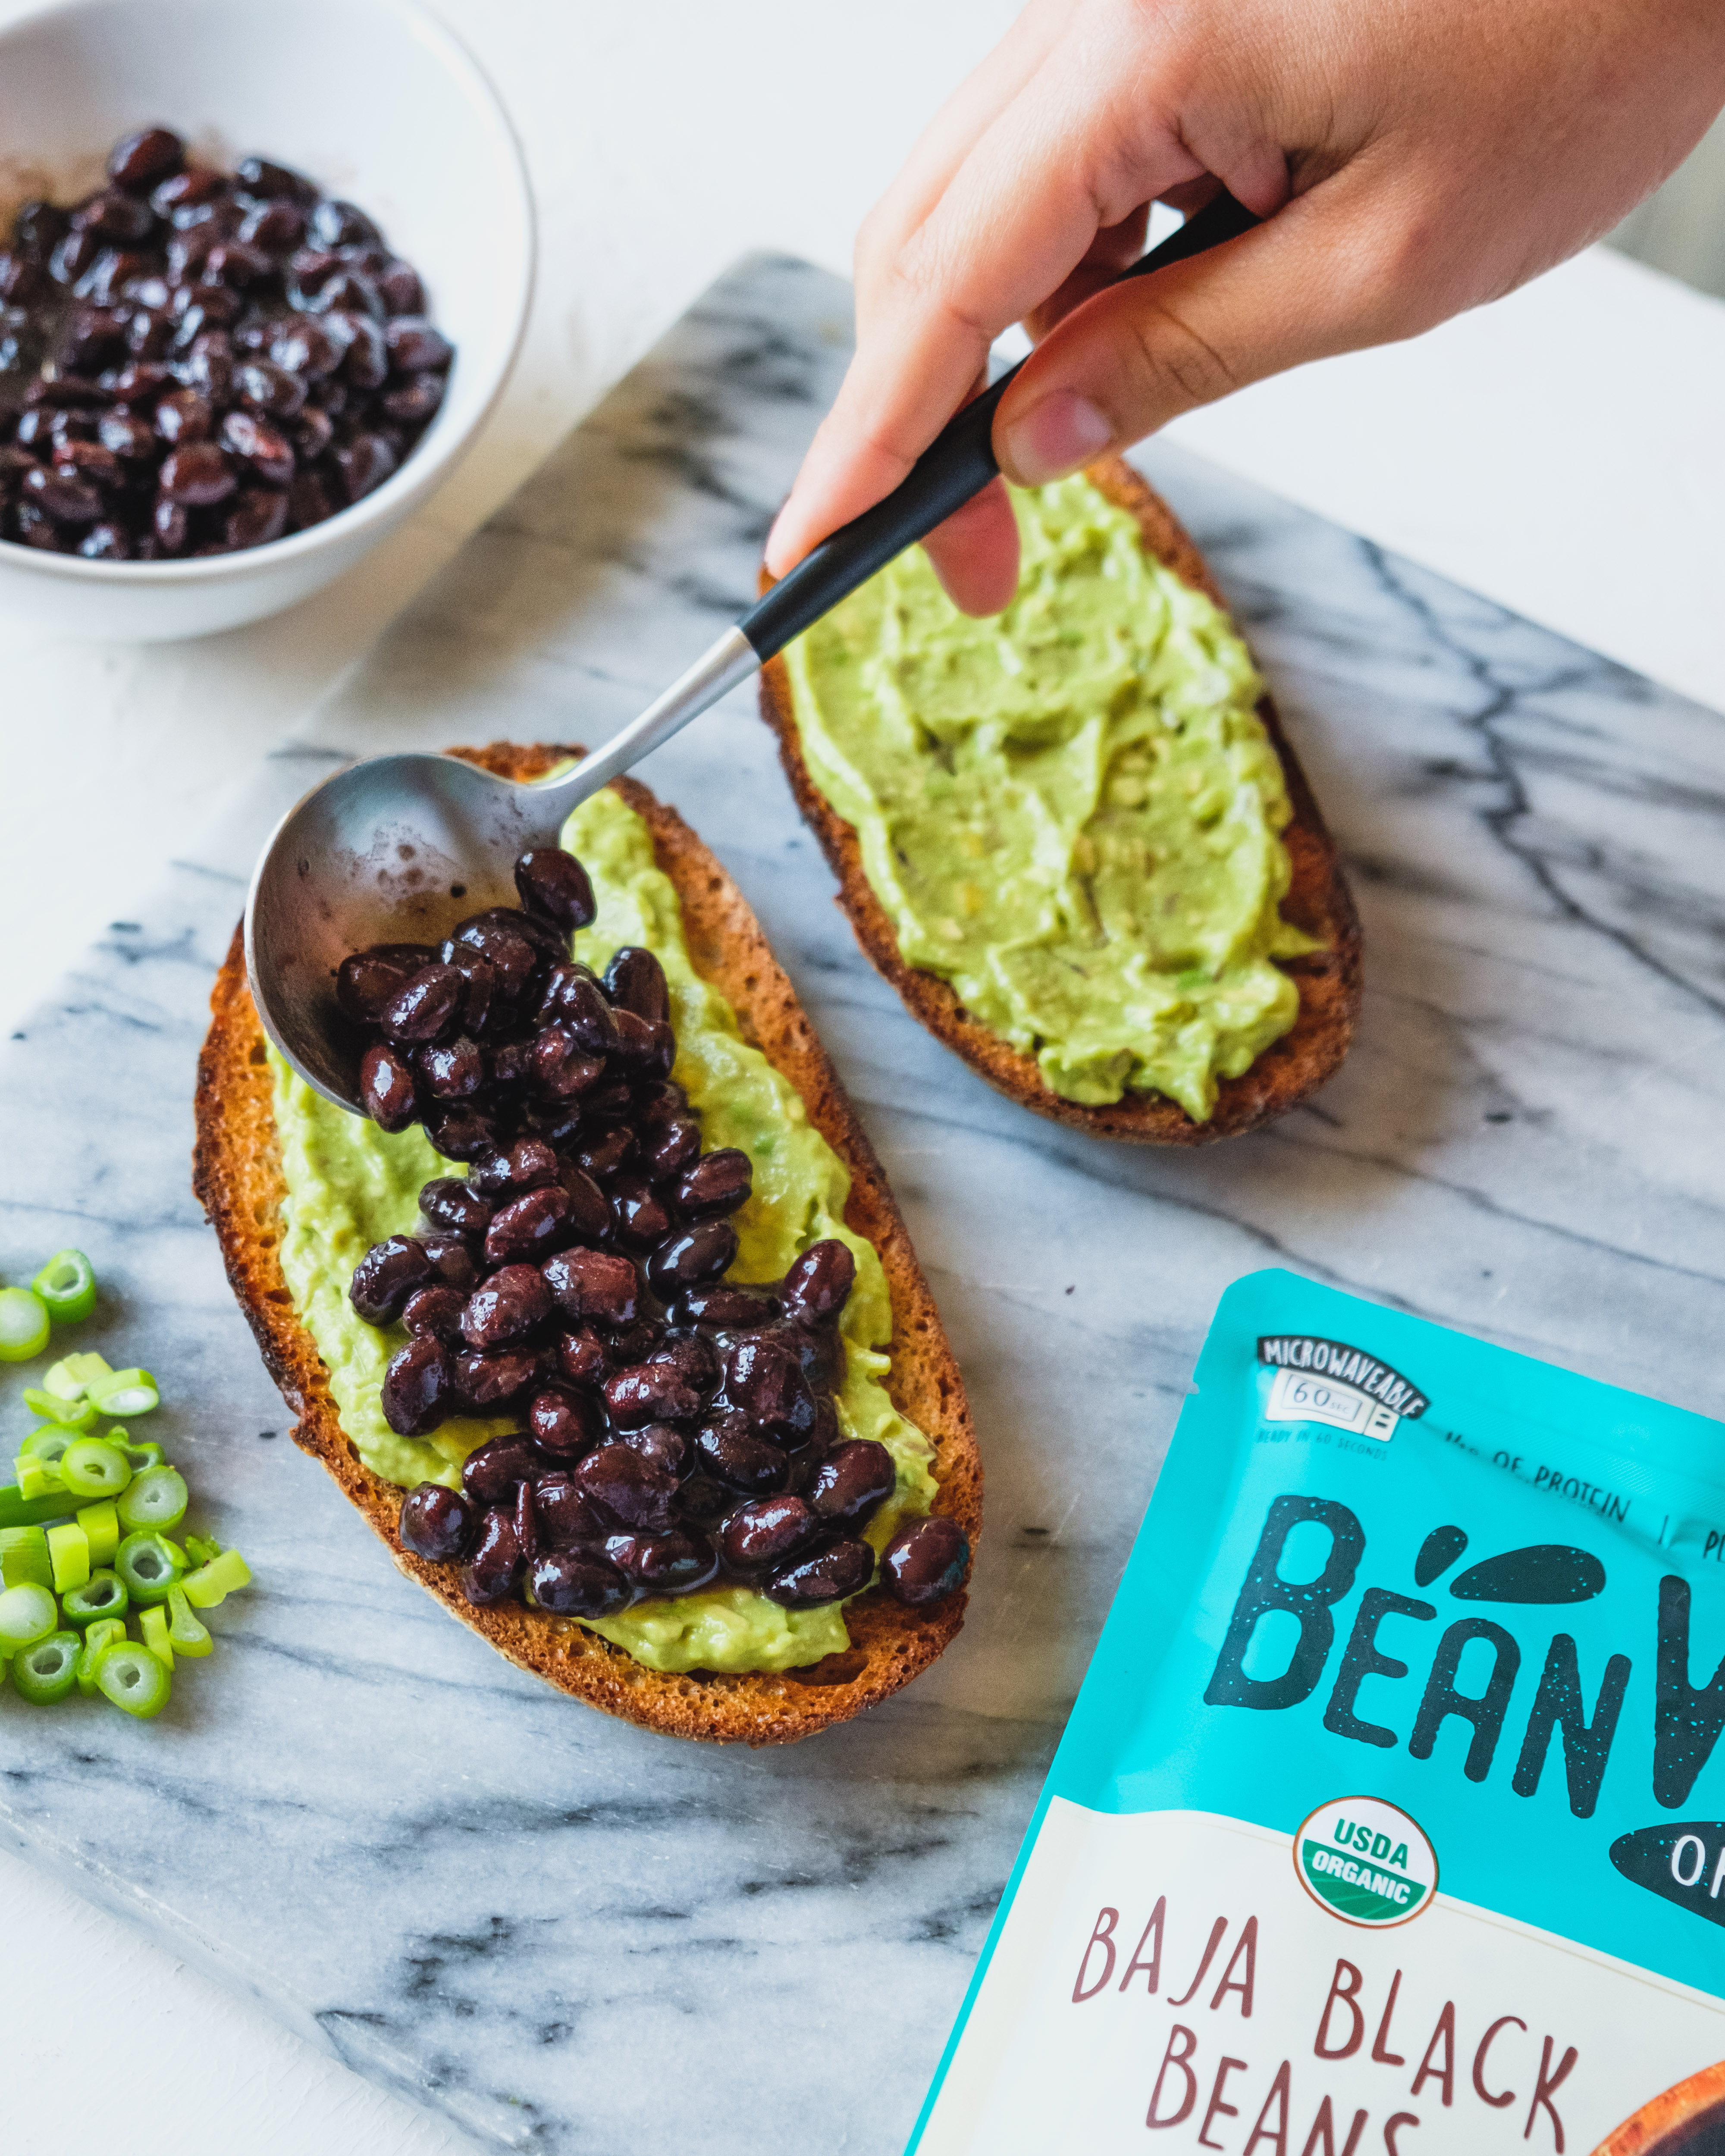 BeanVIVO Organic Baja Black Beans 6 units per case 10.0 oz